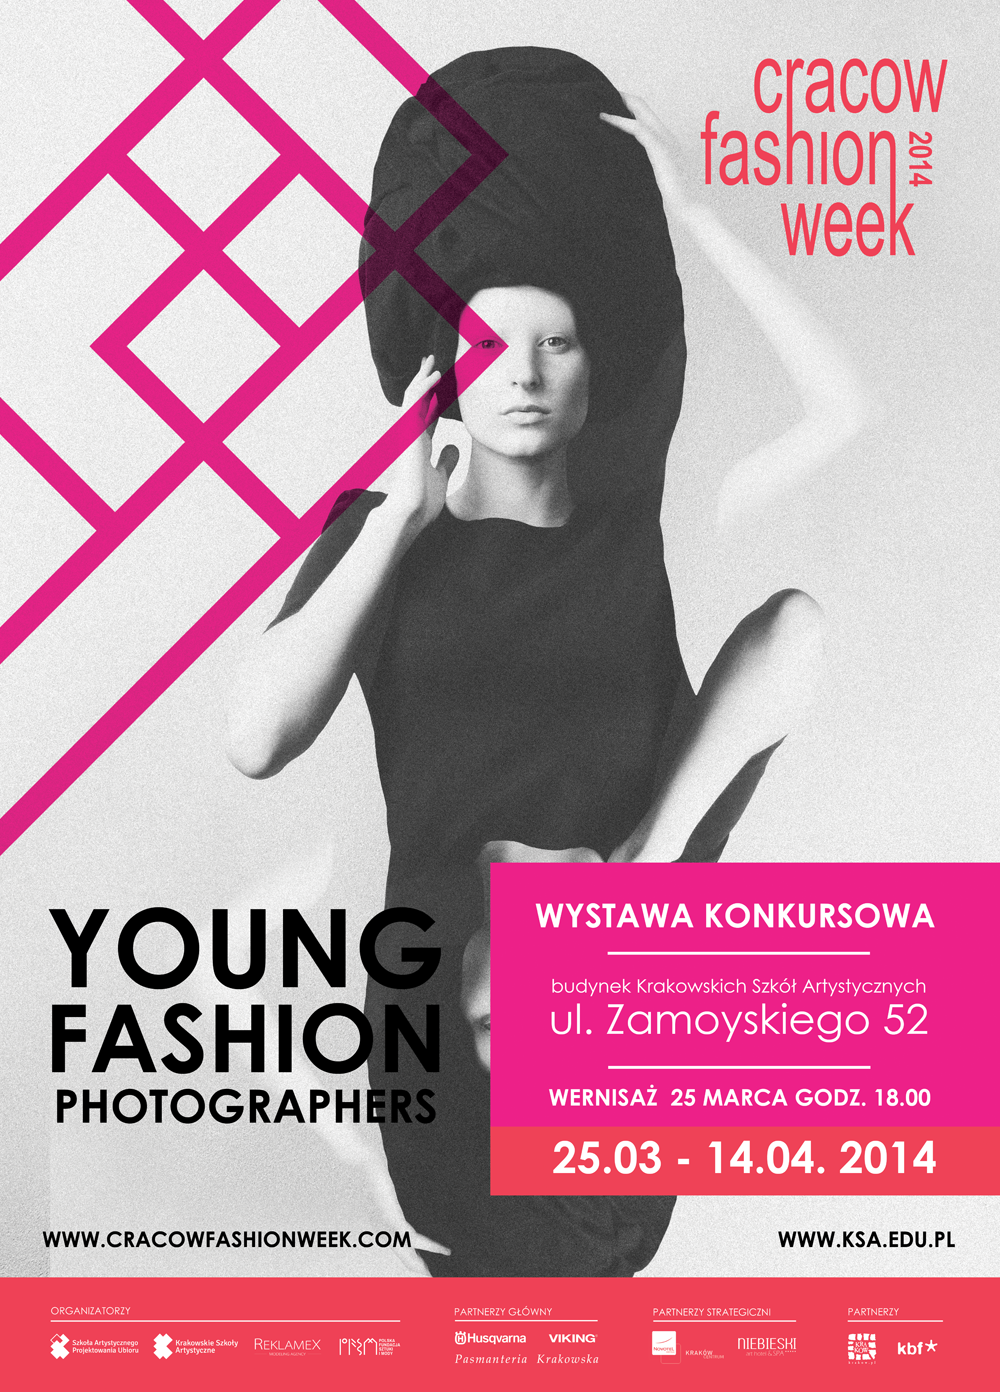 cracow fashion week Nina Gregier proste kreski  editorial posters fashion comunication fashion week printed matter